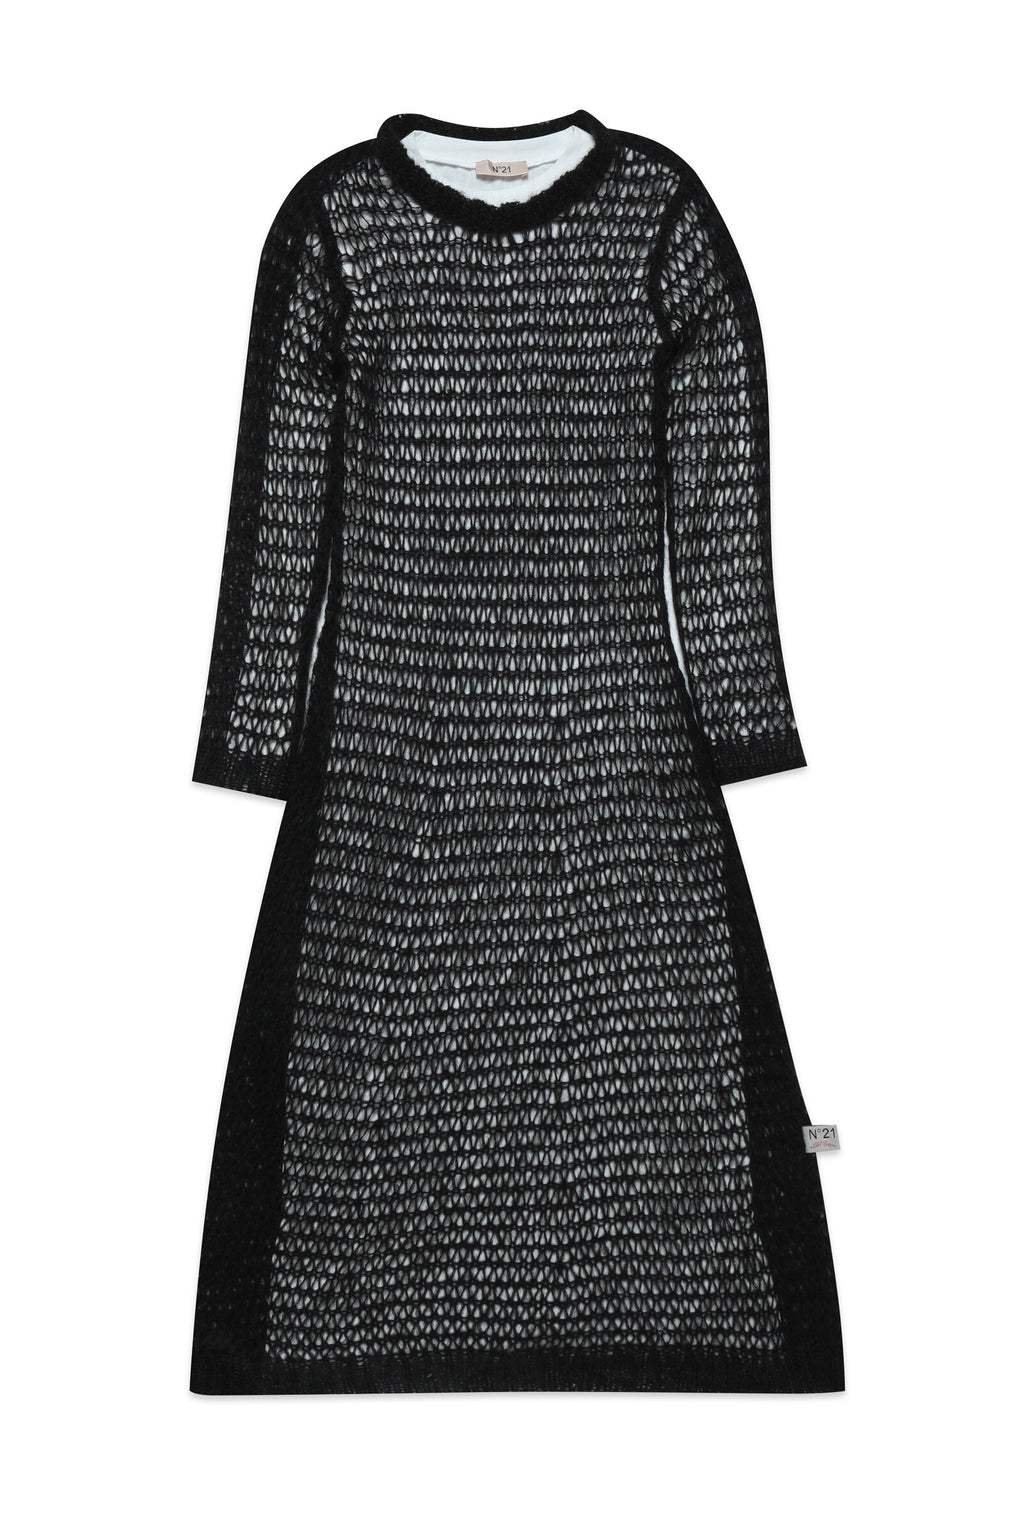 Long, loose-knit dress in
mohair wool blend